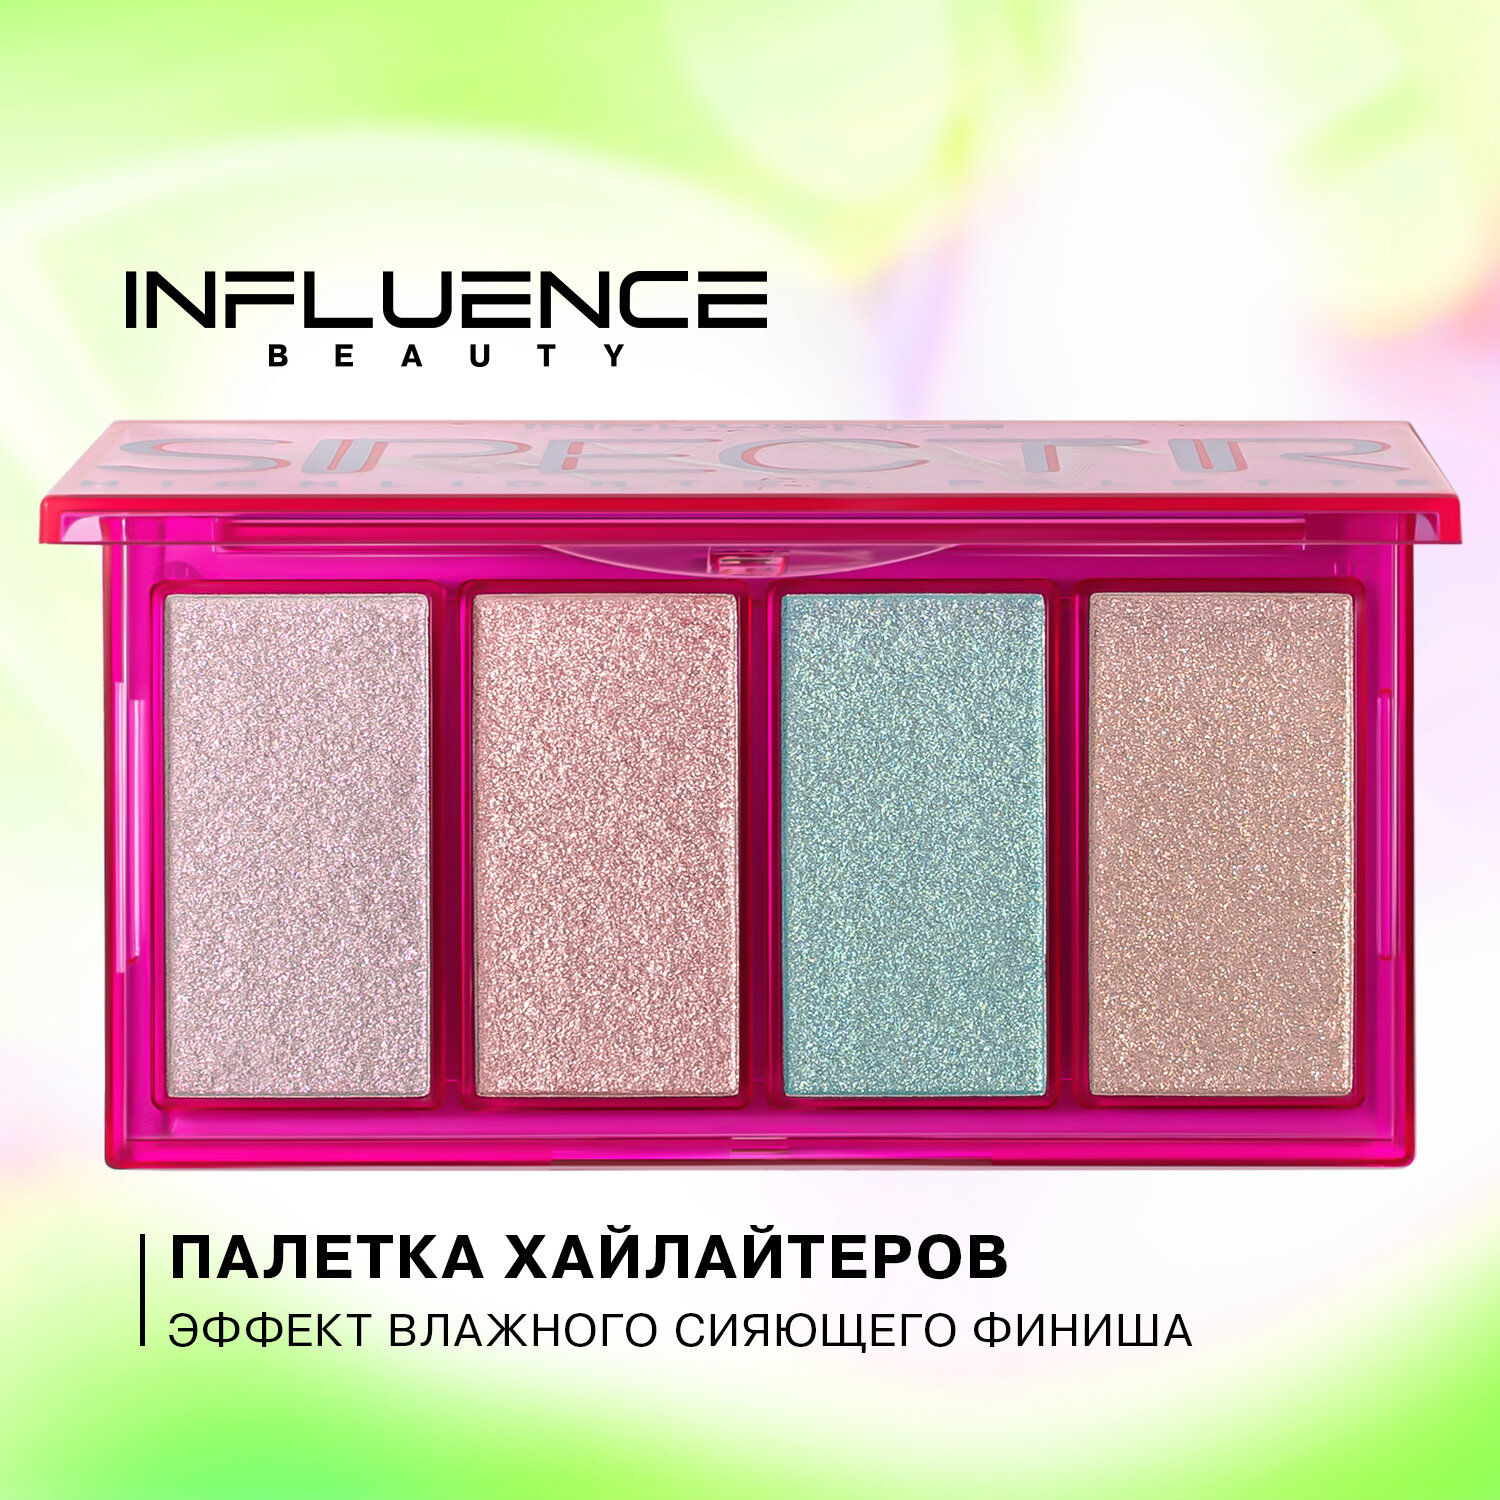 Influence Beauty Палетка хайлайтеров Spectr/Highlighter palette тон/shade 01